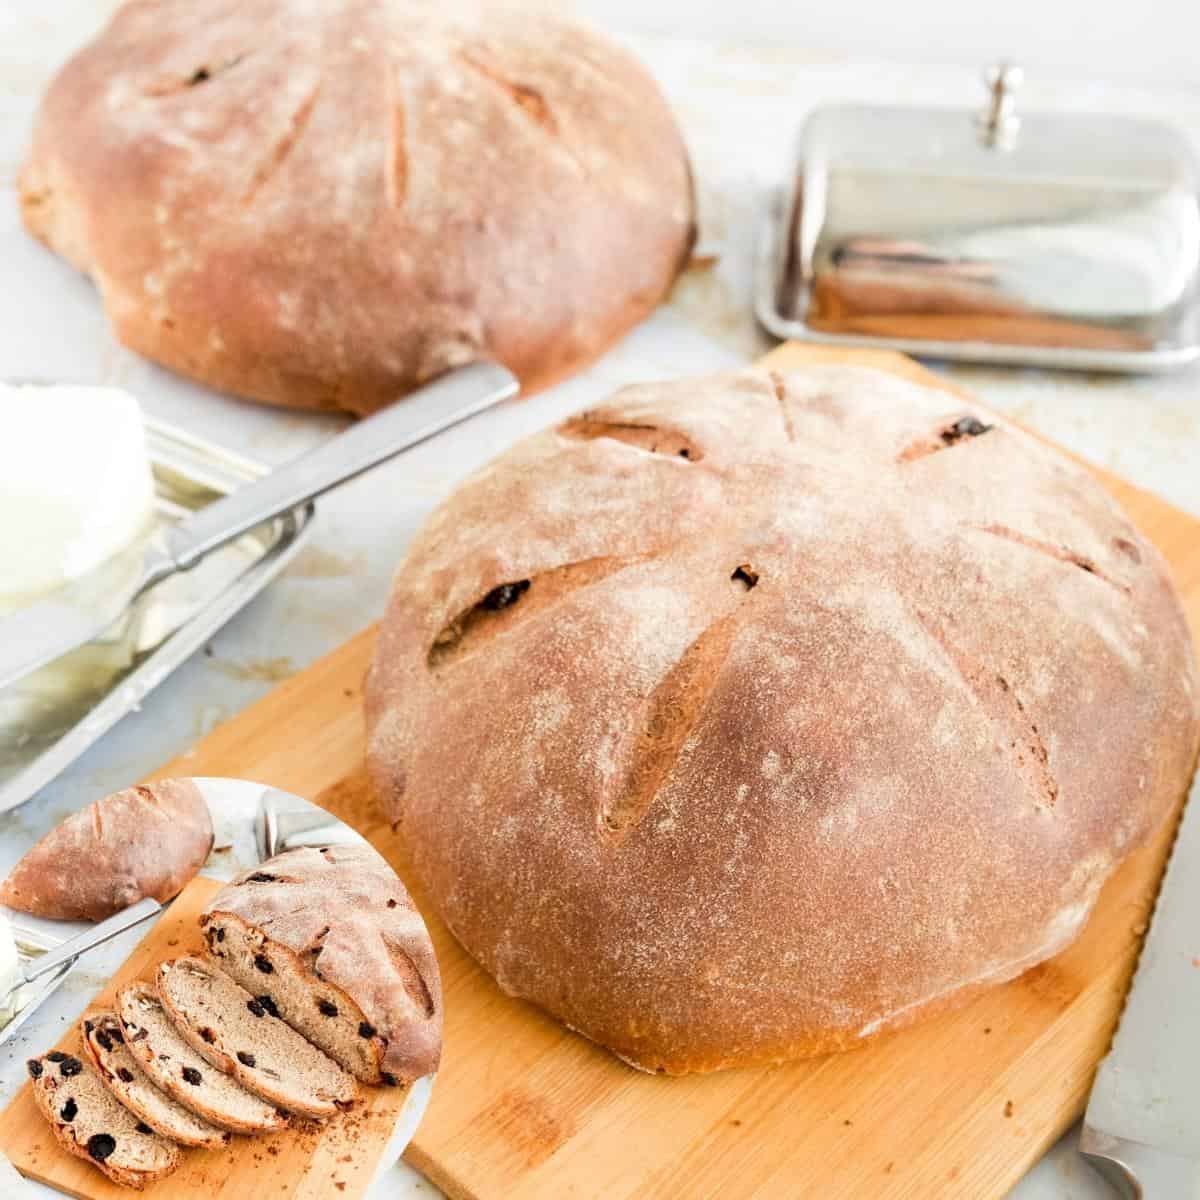 Whole Wheat bread and sliced raisin bread on a wooden board. 